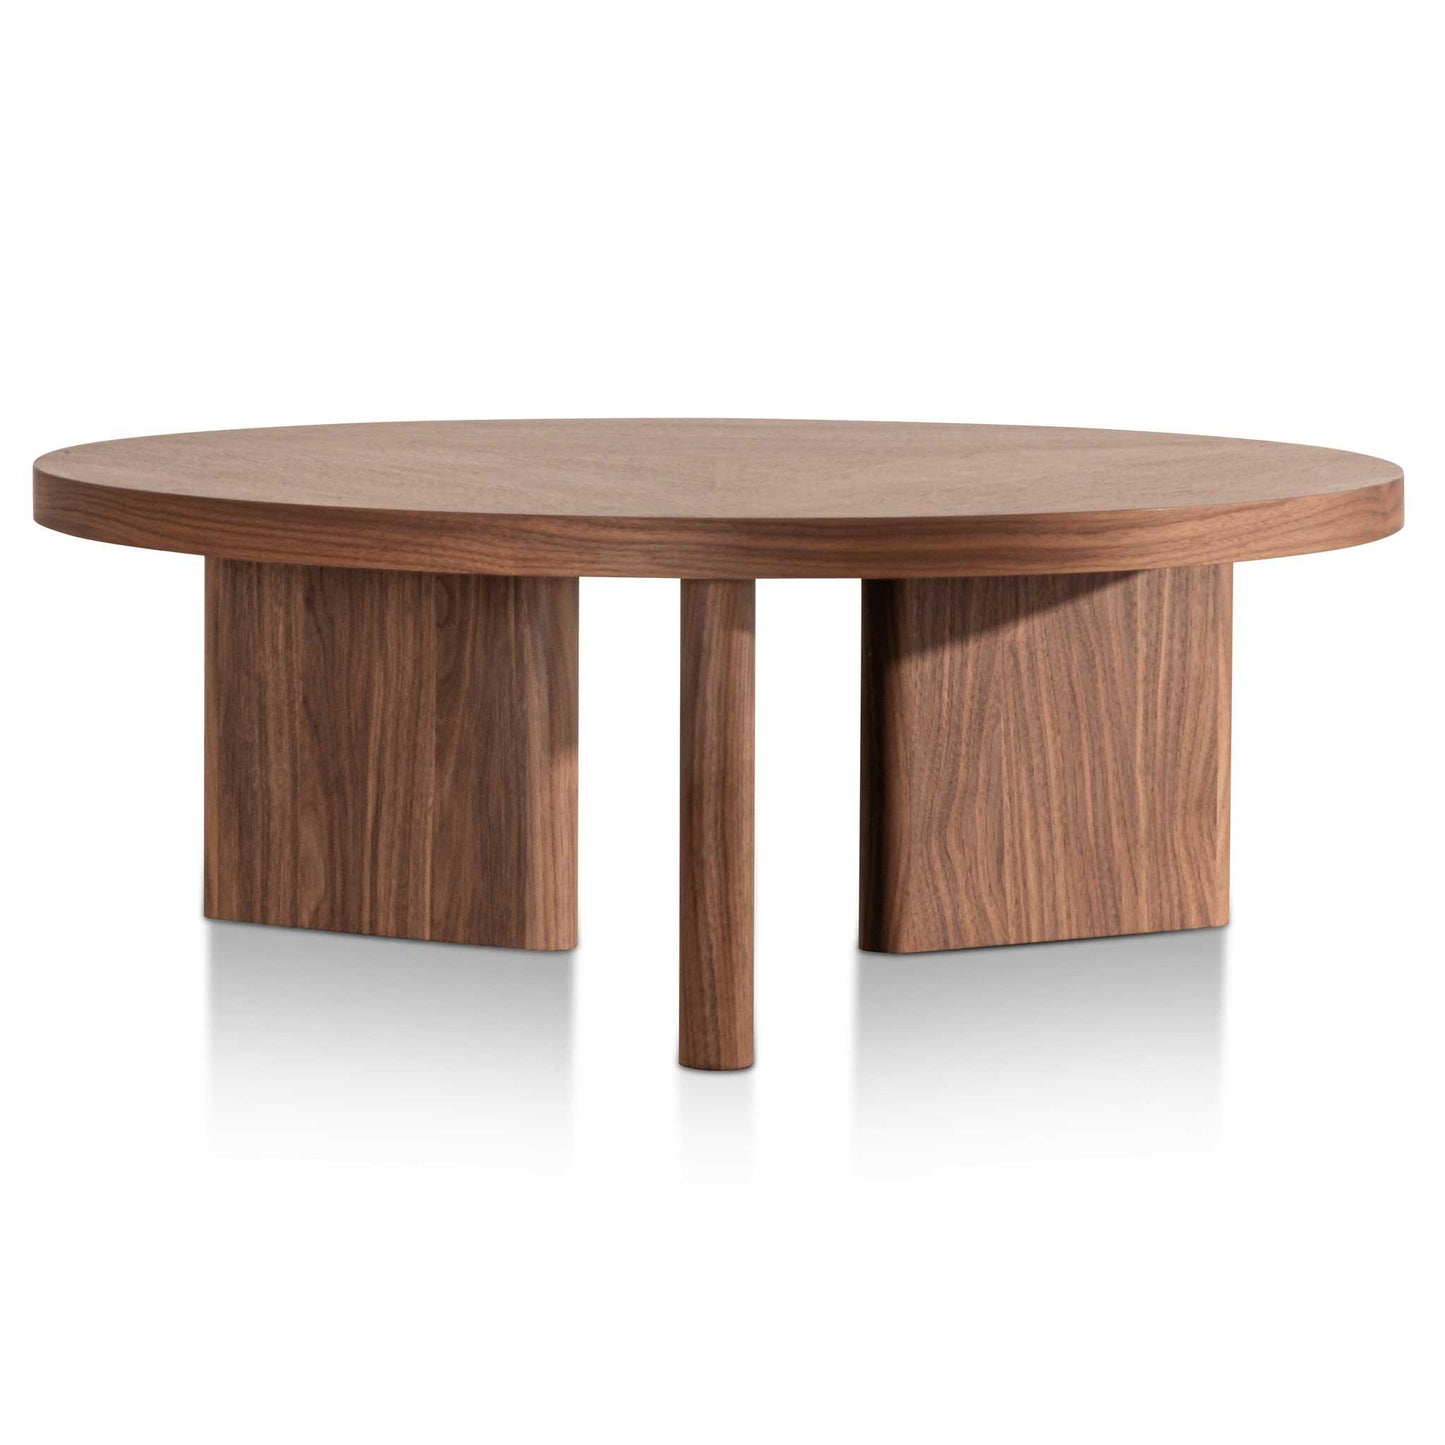 Calibre 100cm Wooden Round Coffee Table - Walnut CF6426-CN-Coffee Tables-Calibre-Prime Furniture